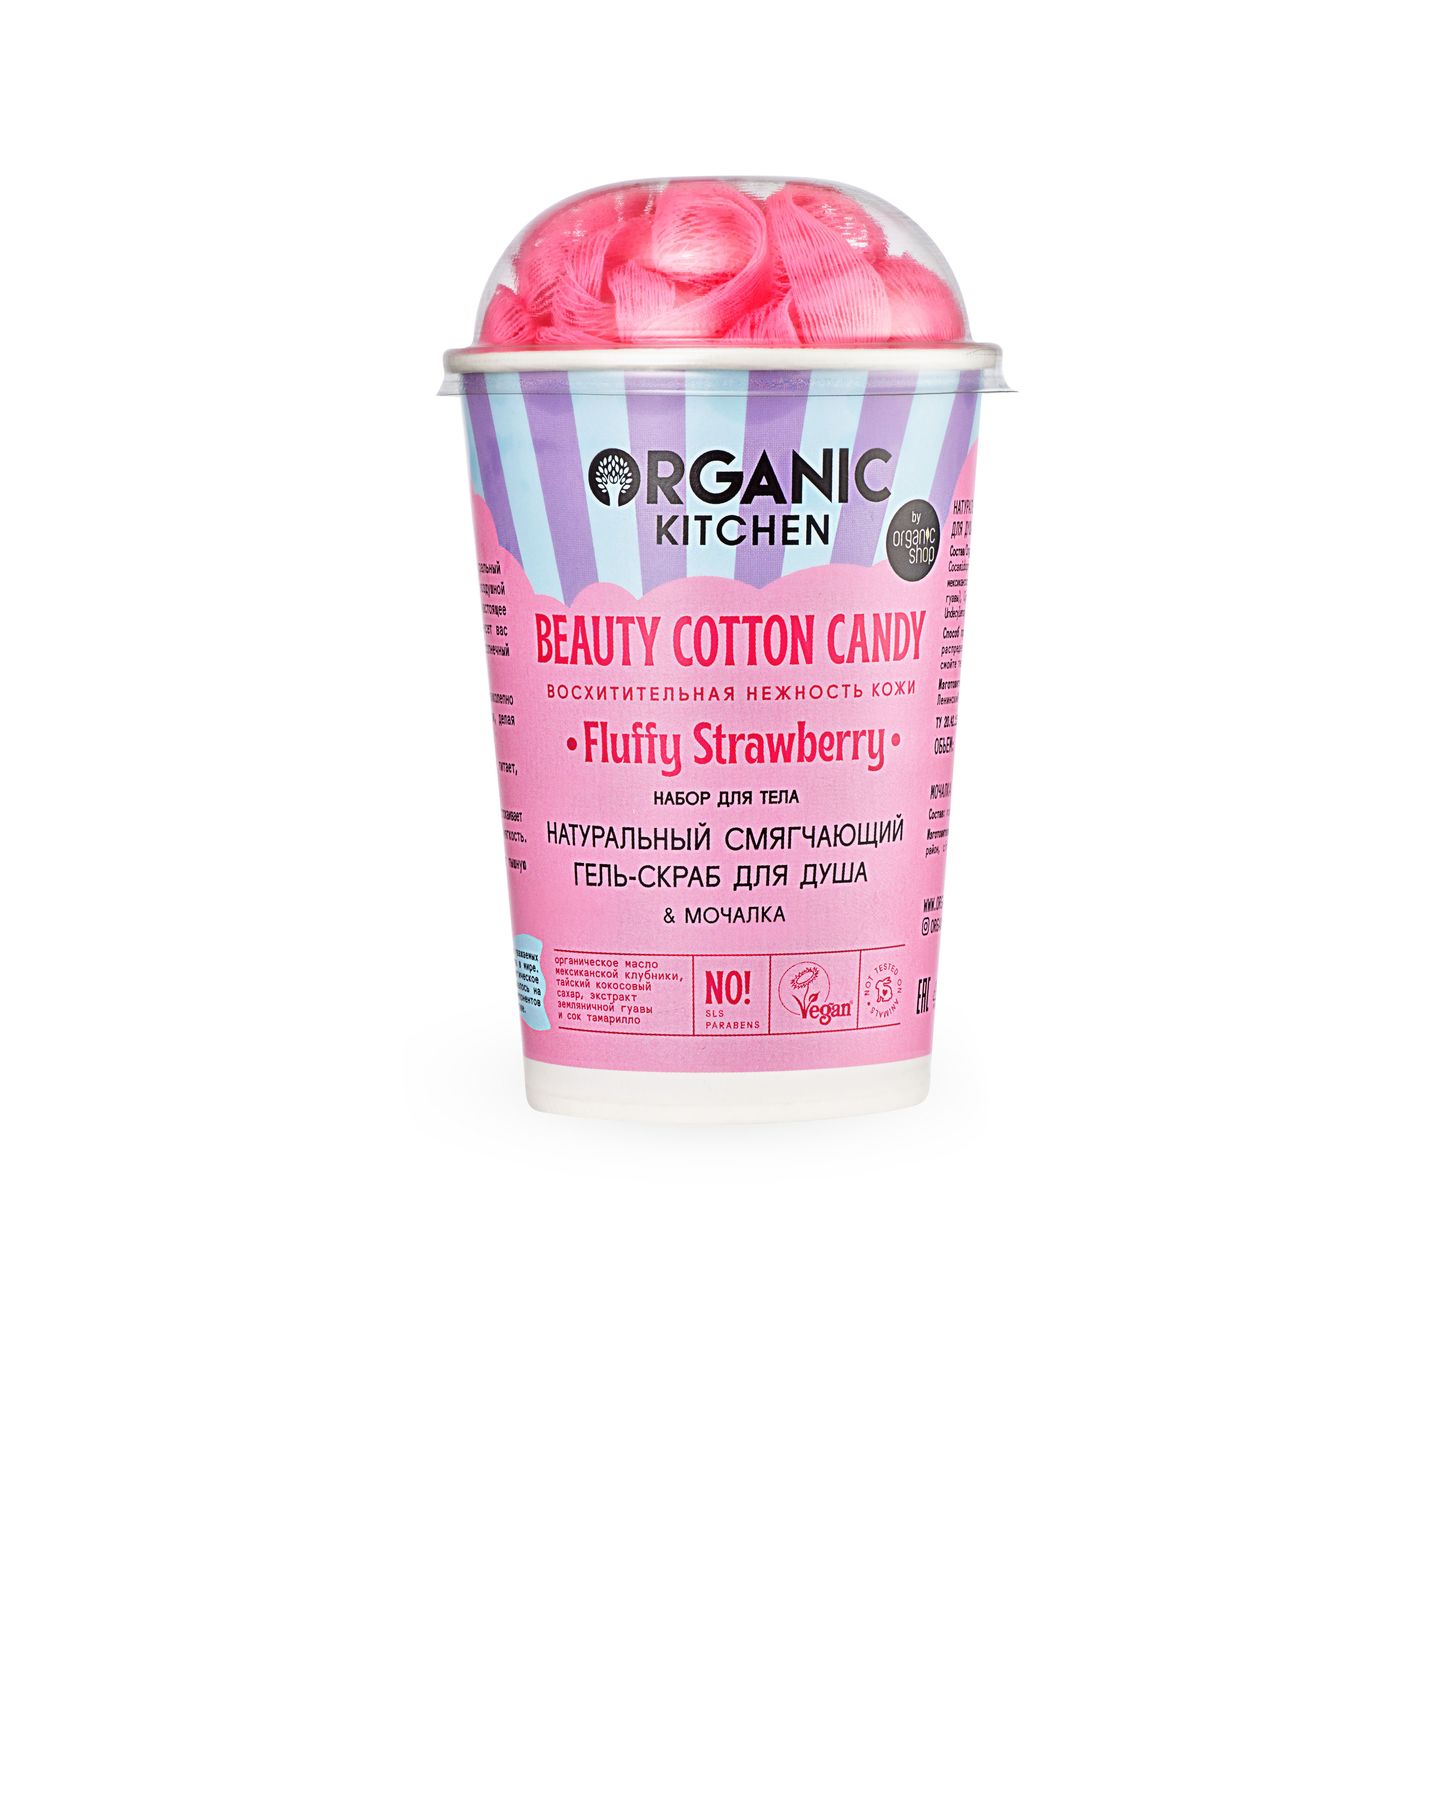 Organic Kitchen Подарочный набор “Beauty Cotton Candy